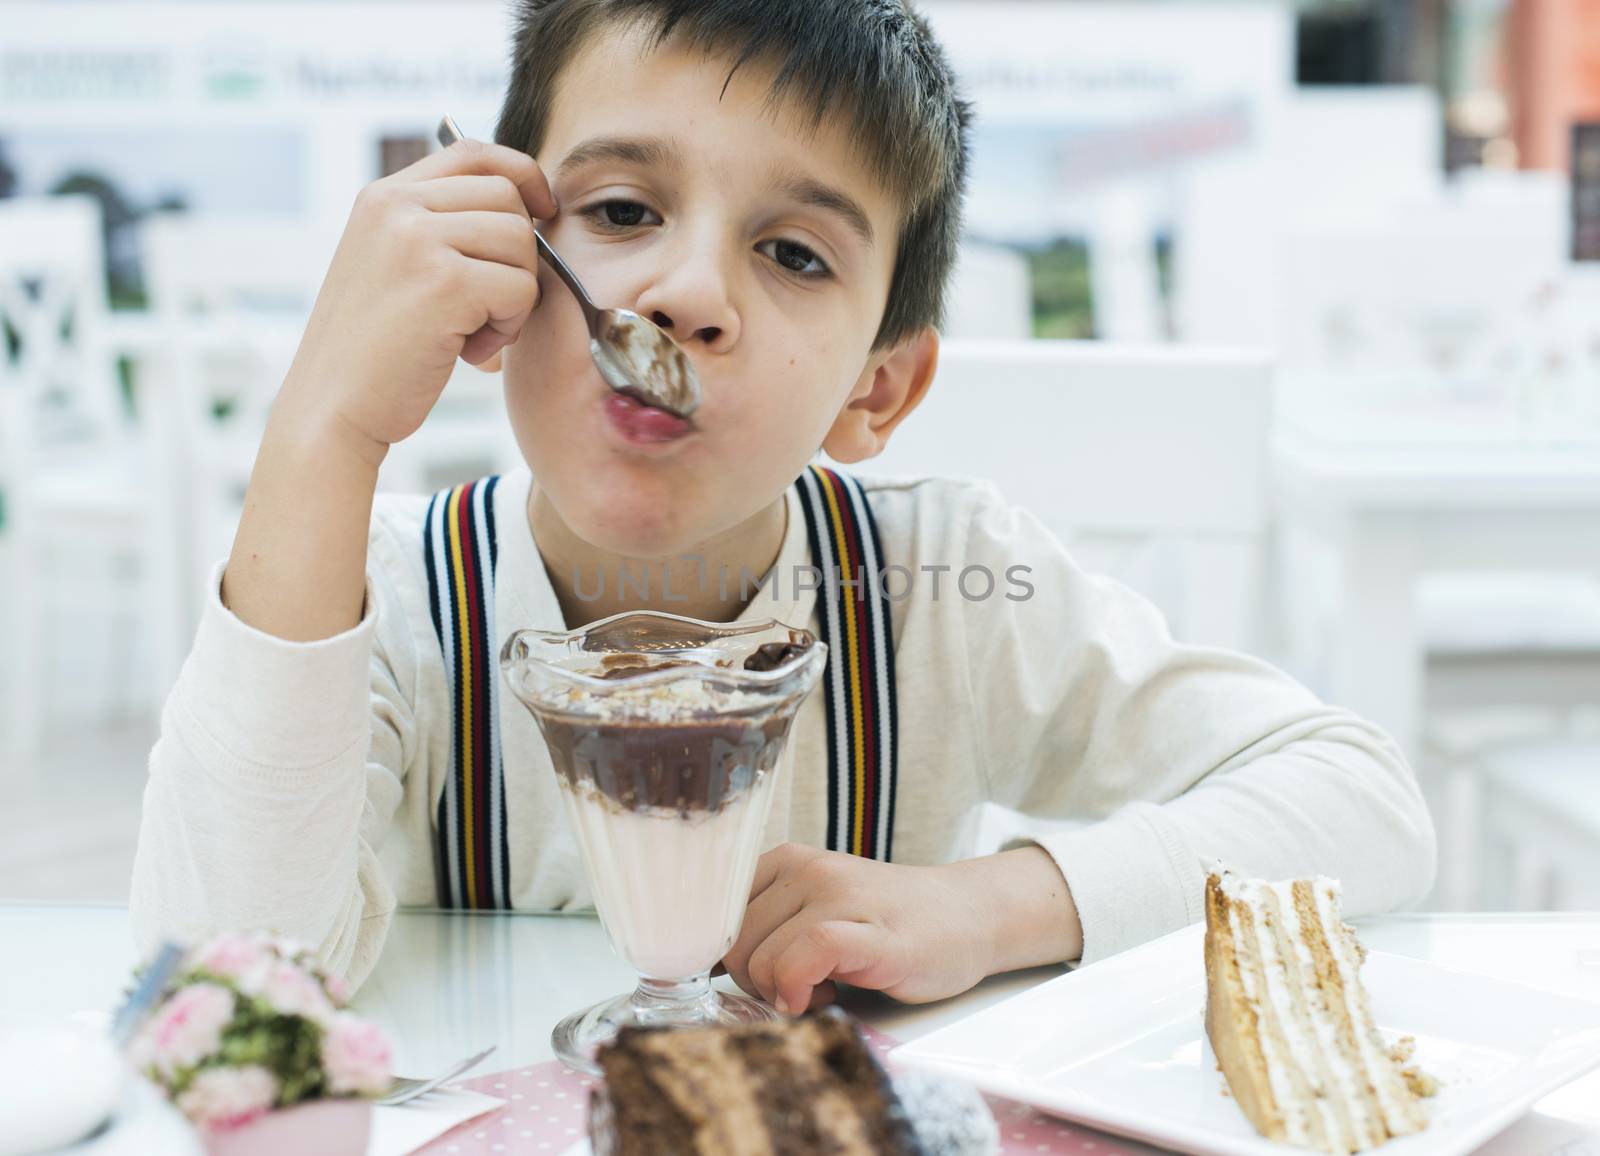 Child eat milk choco shake on a table